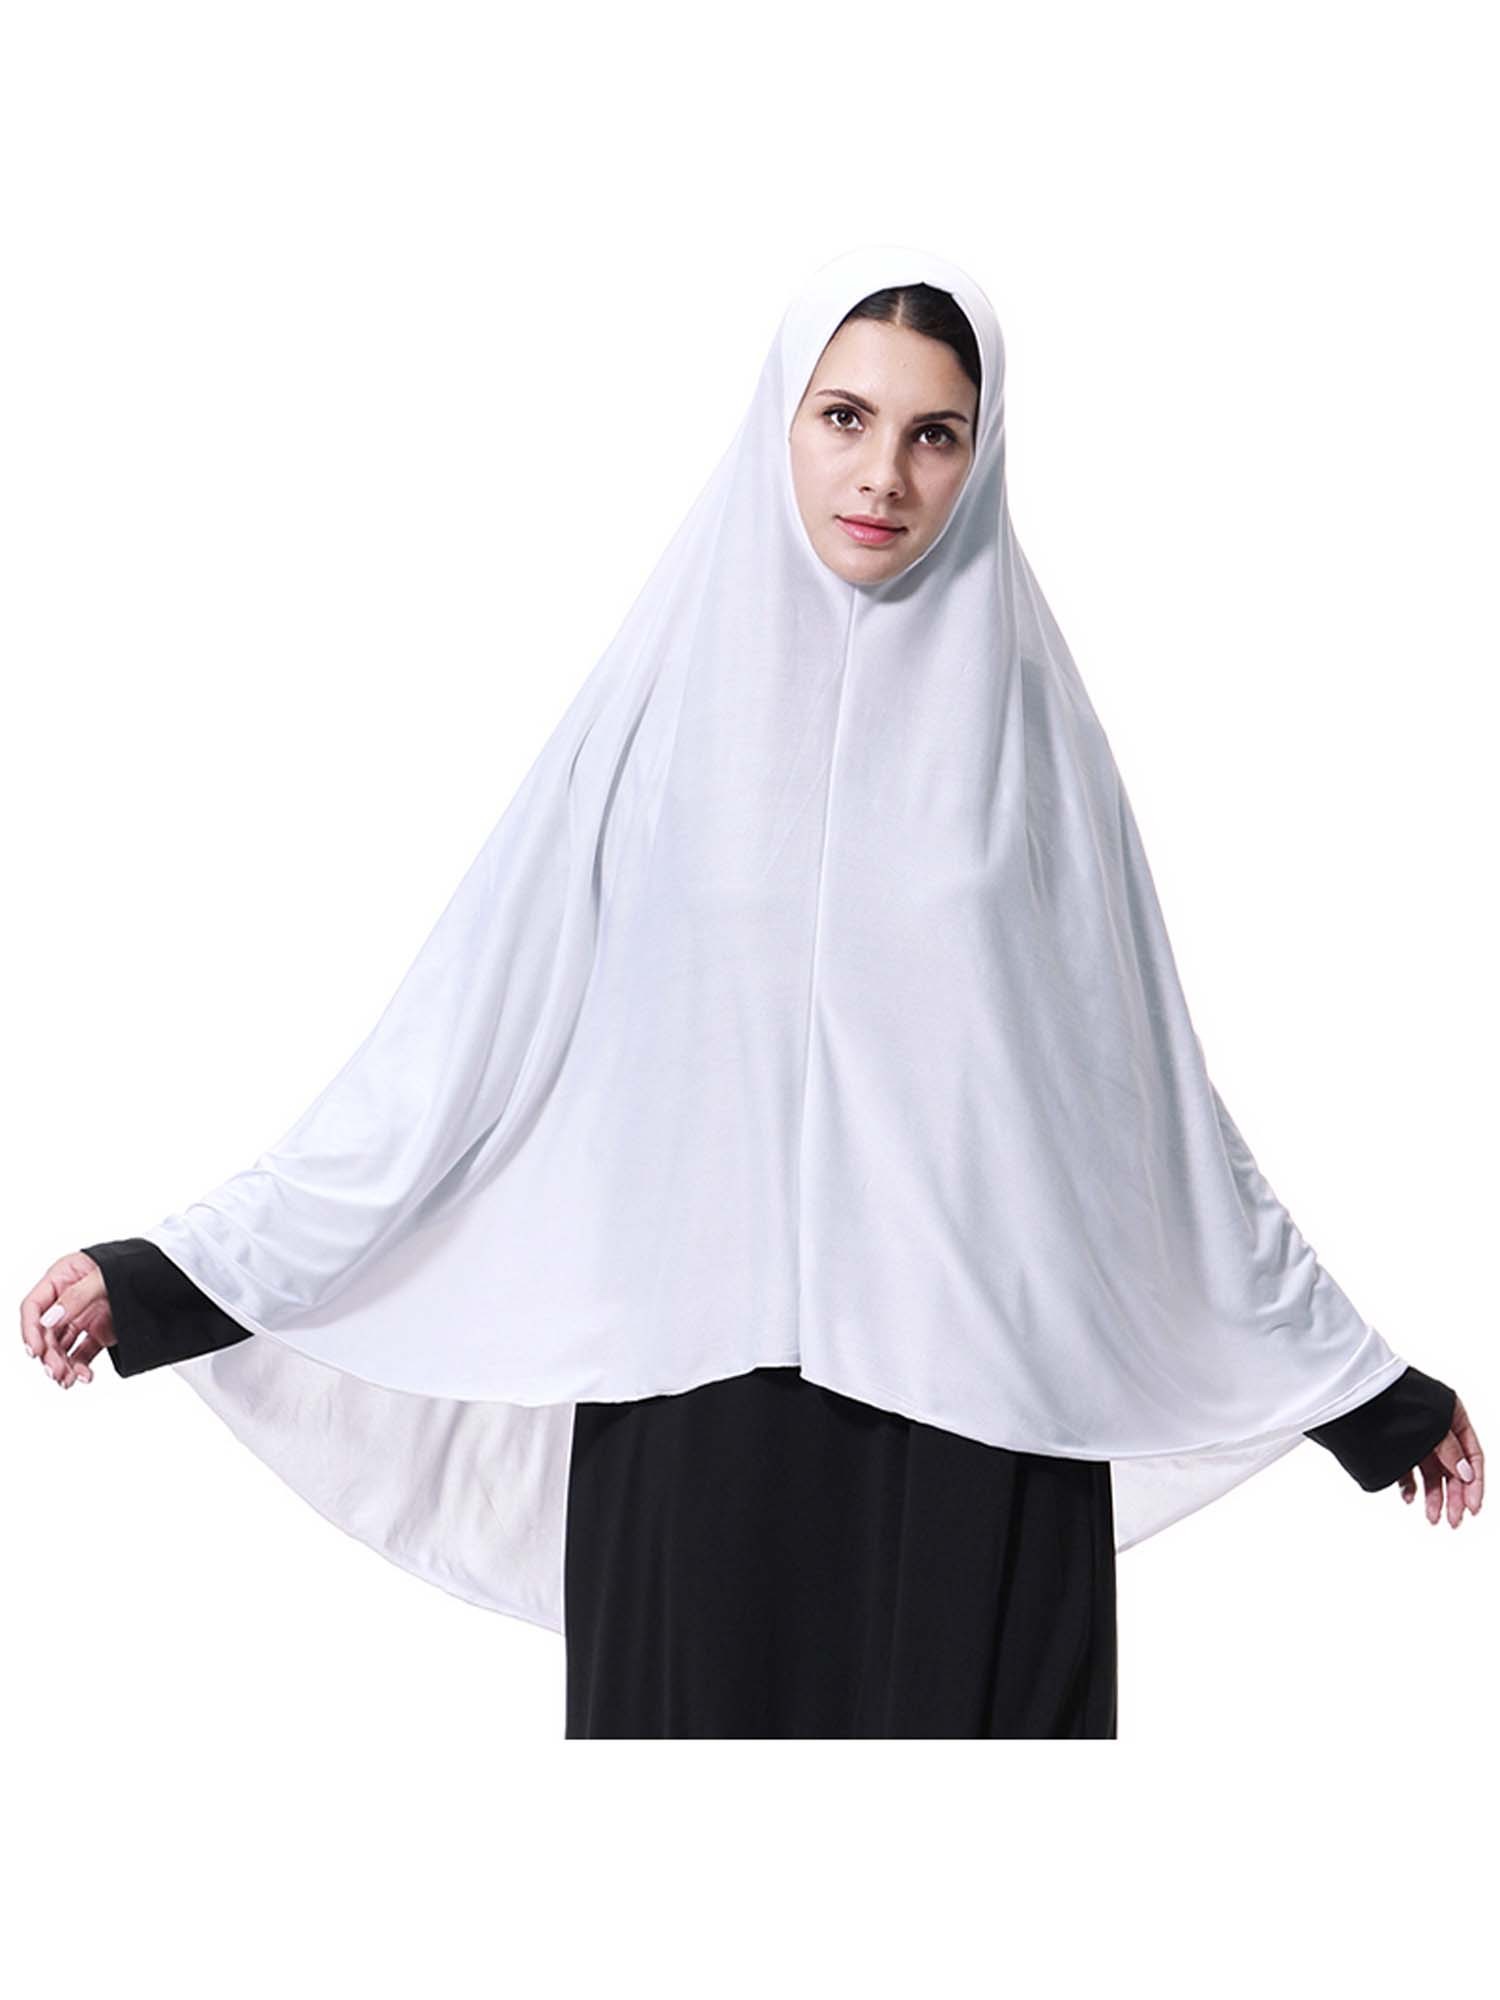 Details about  / Muslim Women Plain Scarf Chiffon Hijab Shawl Headscarf Wrap Scarves Stoles Arab